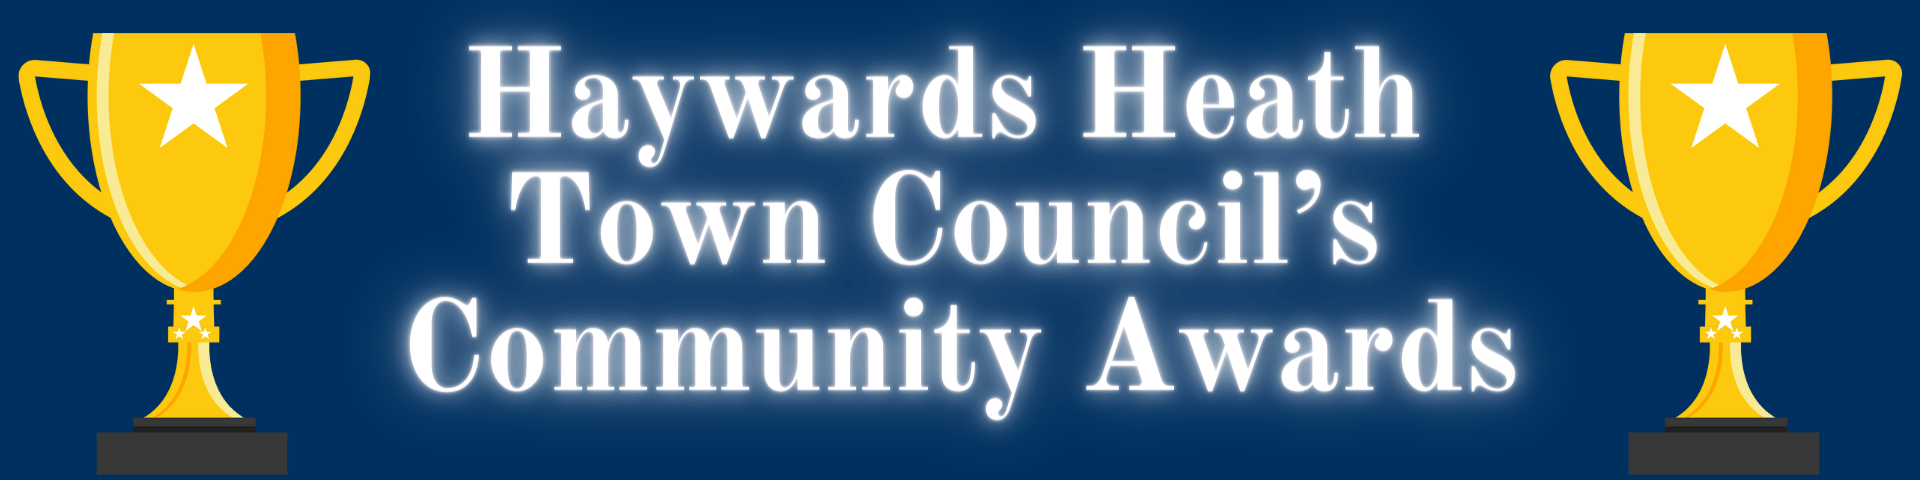 Haywards Heath Town Council's Community Awards